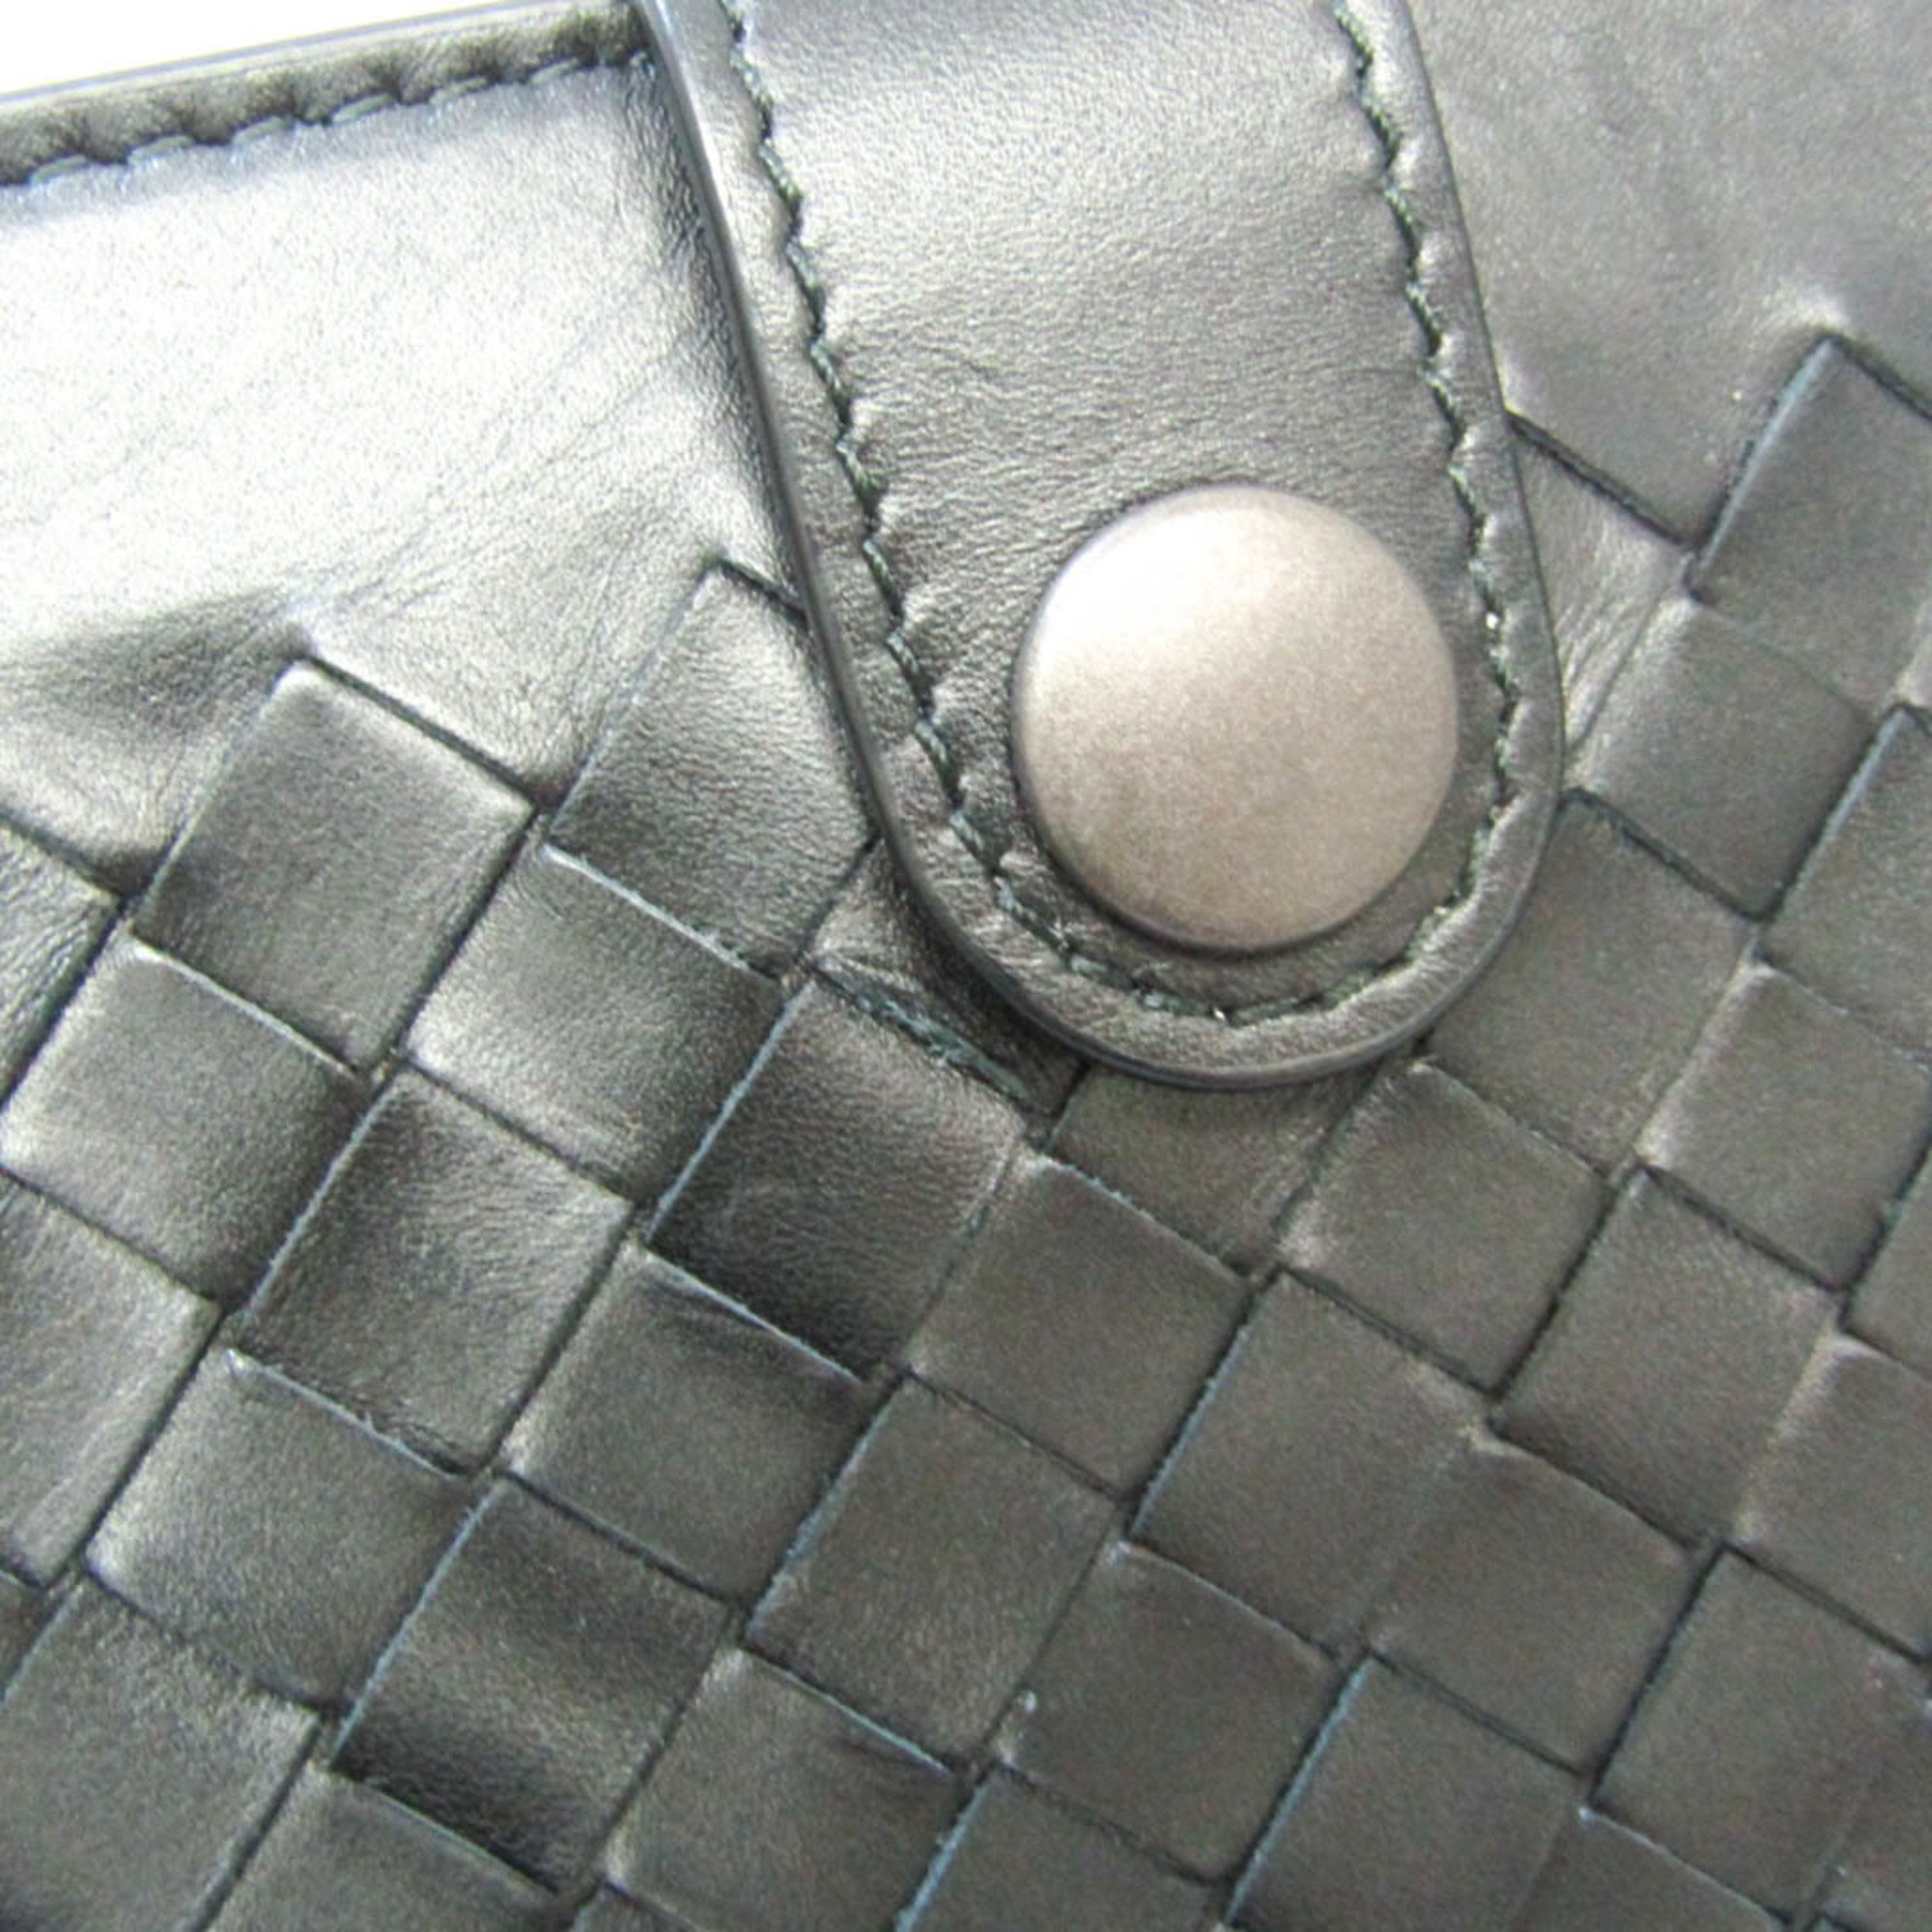 Bottega Veneta Intrecciato LEGGERRO 302652 Men's Leather Clutch Bag Black